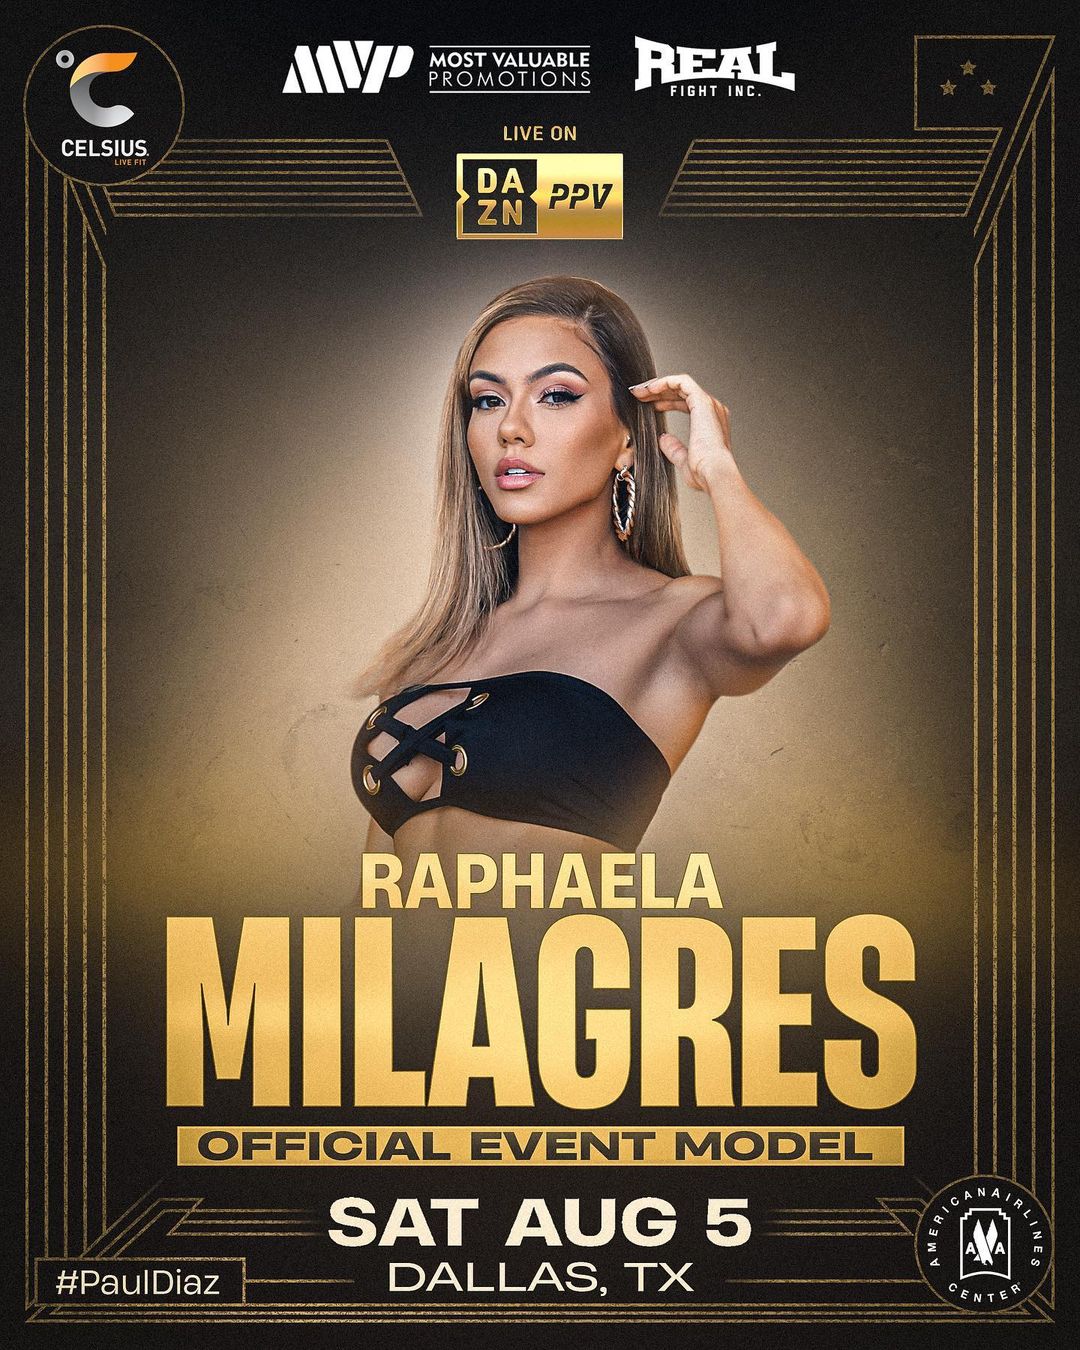 Raphaela Milagres is a Brazilian ring girl working at Paul vs Diaz